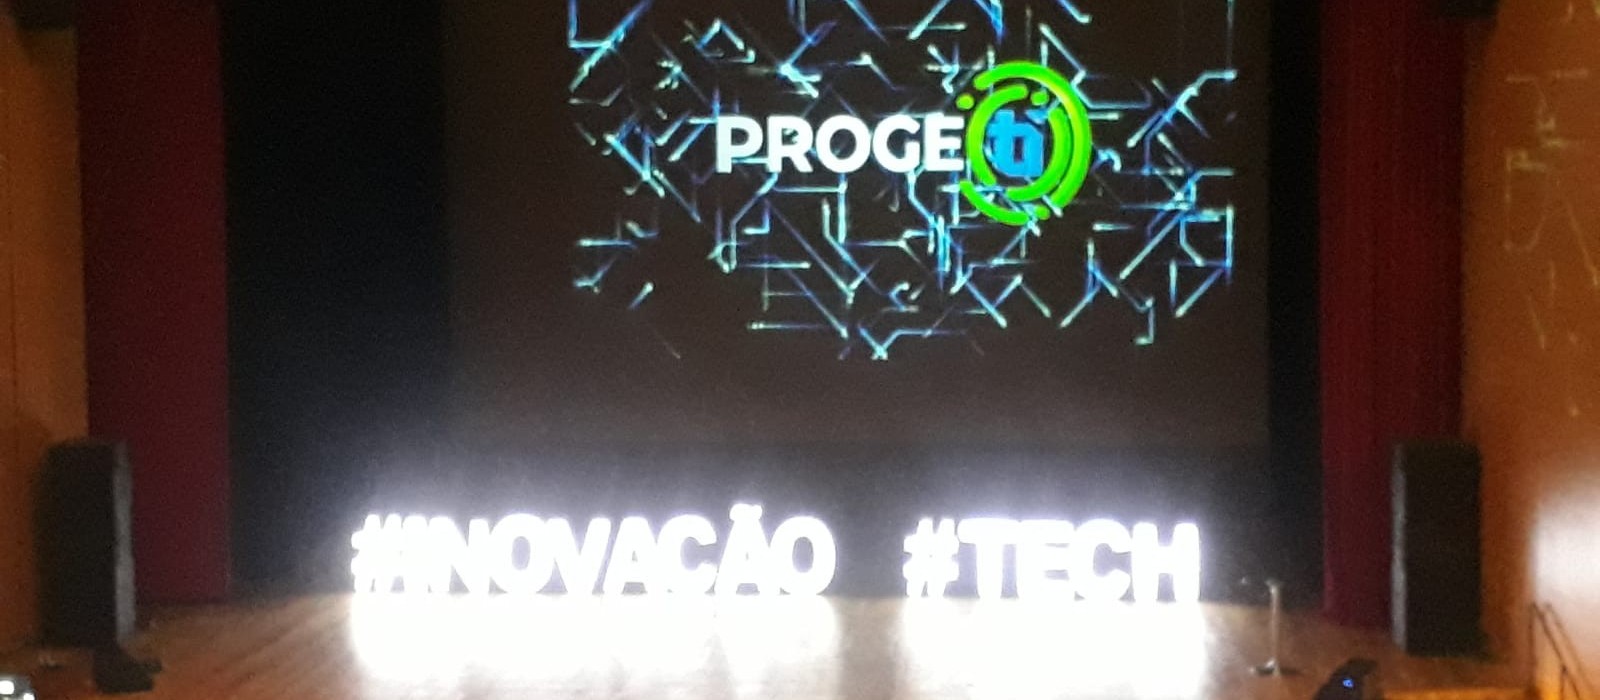 Cascavel lança programa ProgeTi